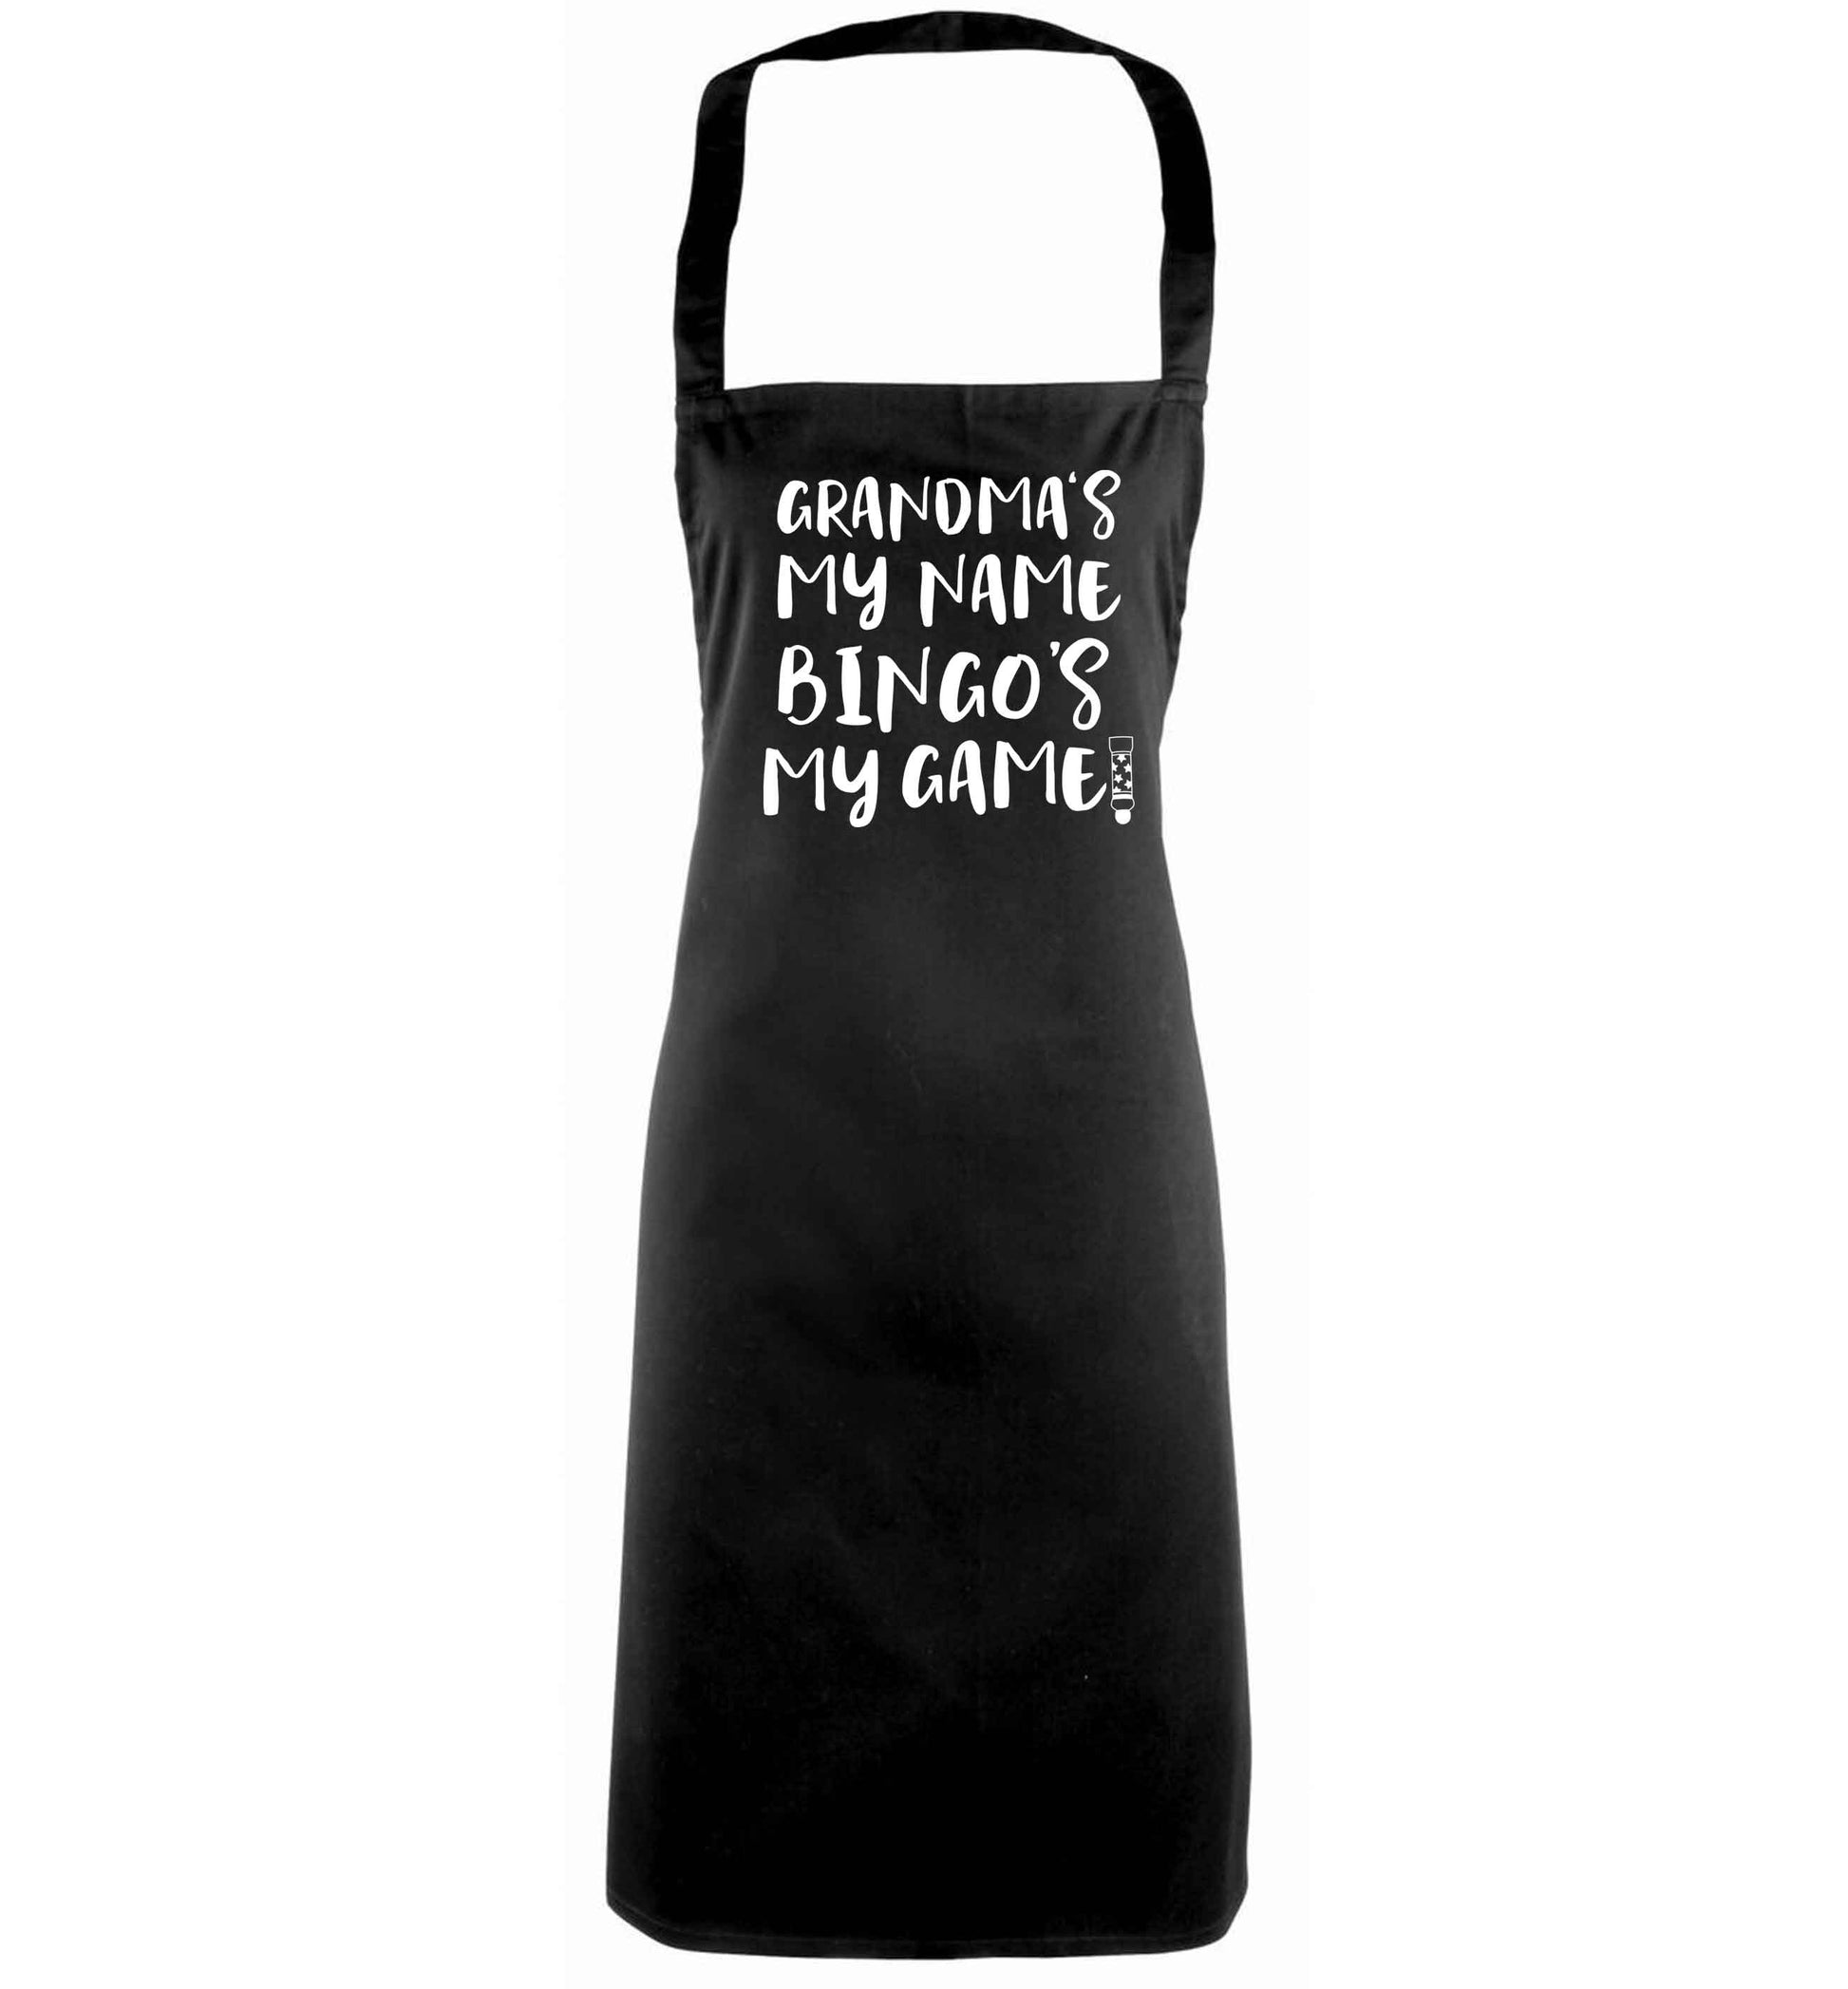 Grandma's my name bingo's my game! black apron